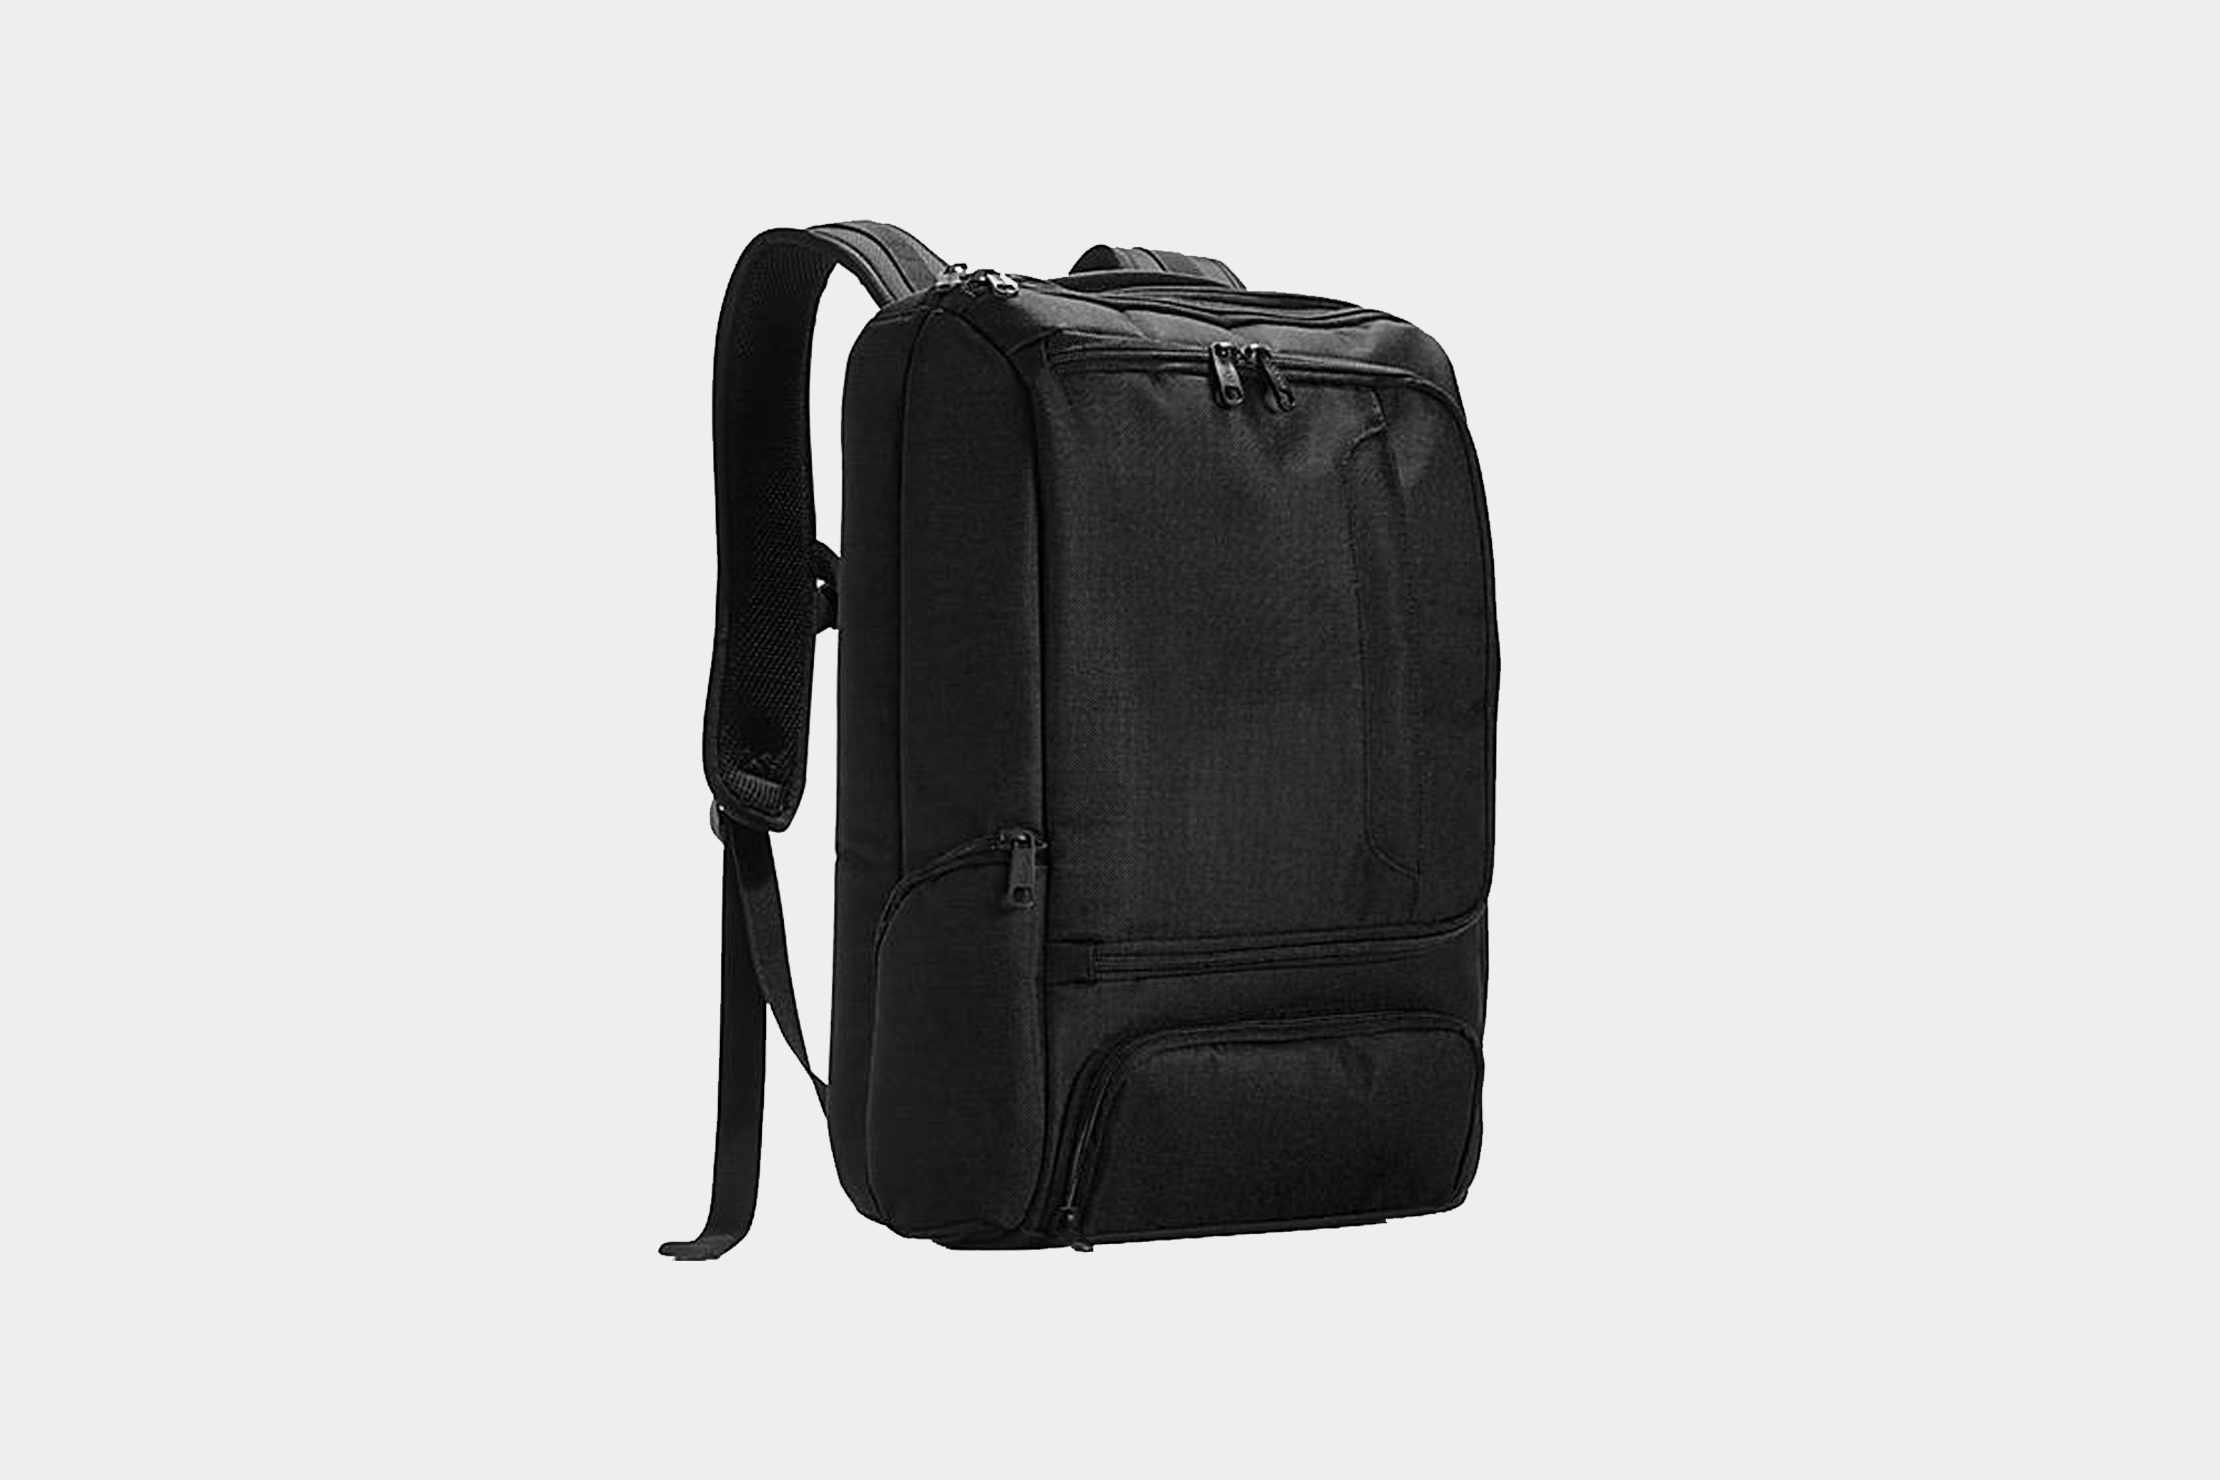 eBags Pro Slim Laptop Backpack Review | Pack Hacker